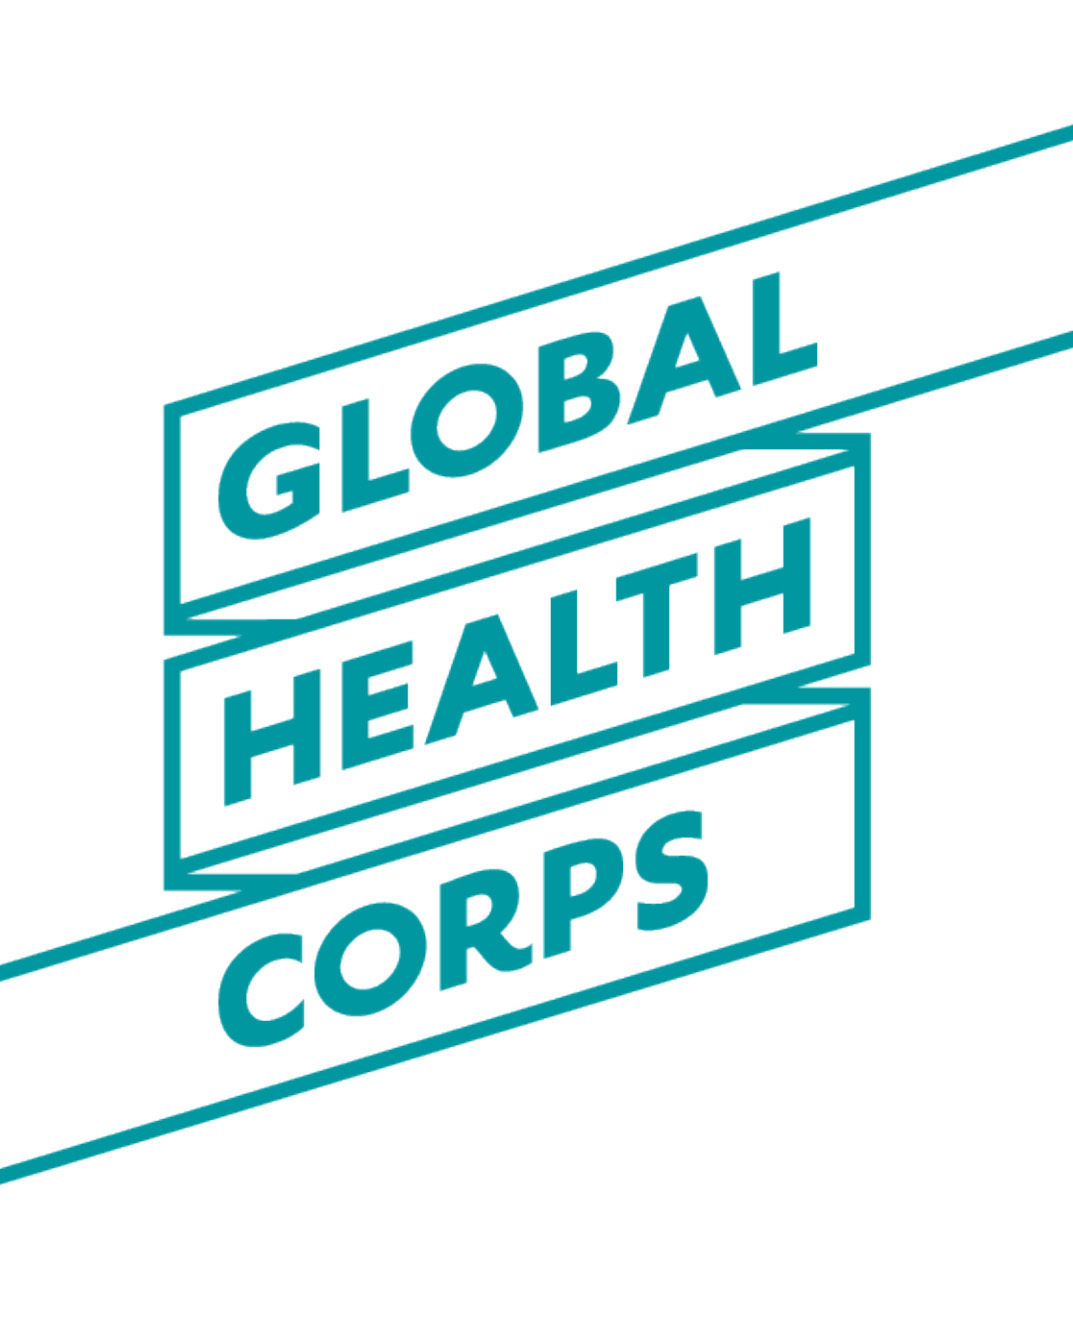 Global Health Corps green and white logo